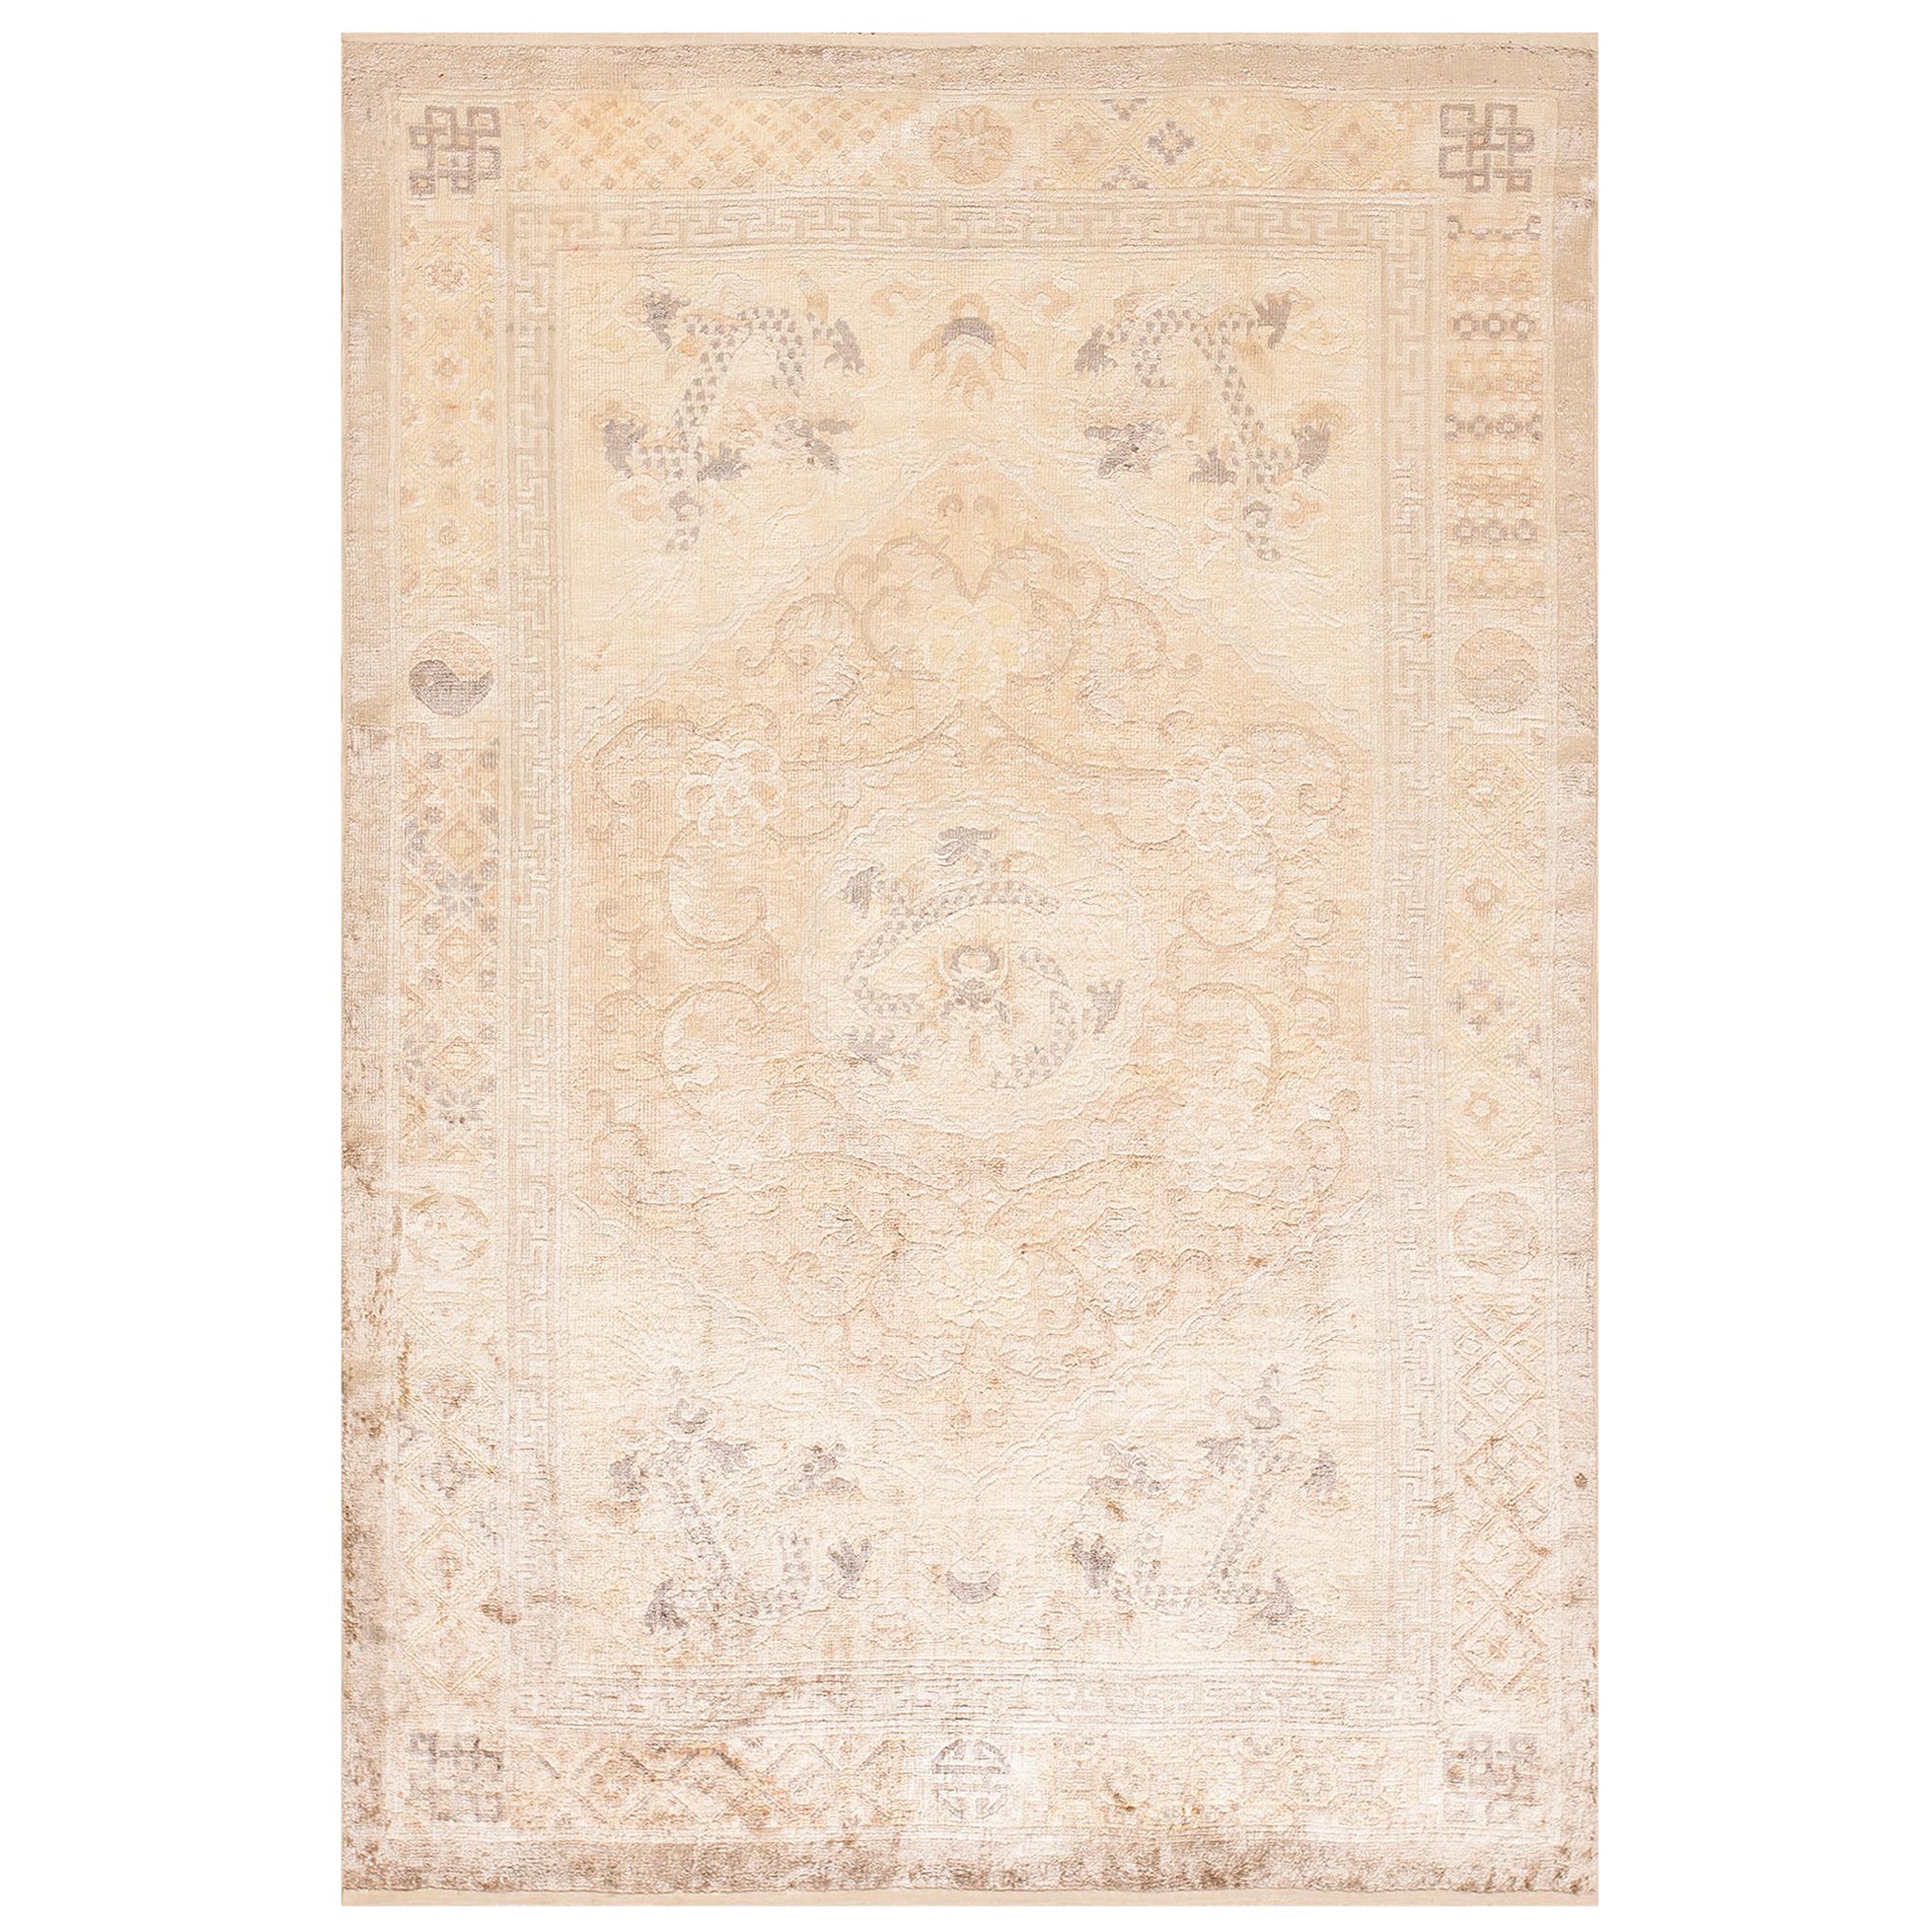 Early 20th Century Silk Chinese Dragon Carpet ( 4'2" x 6' - 127 x 183 ) 